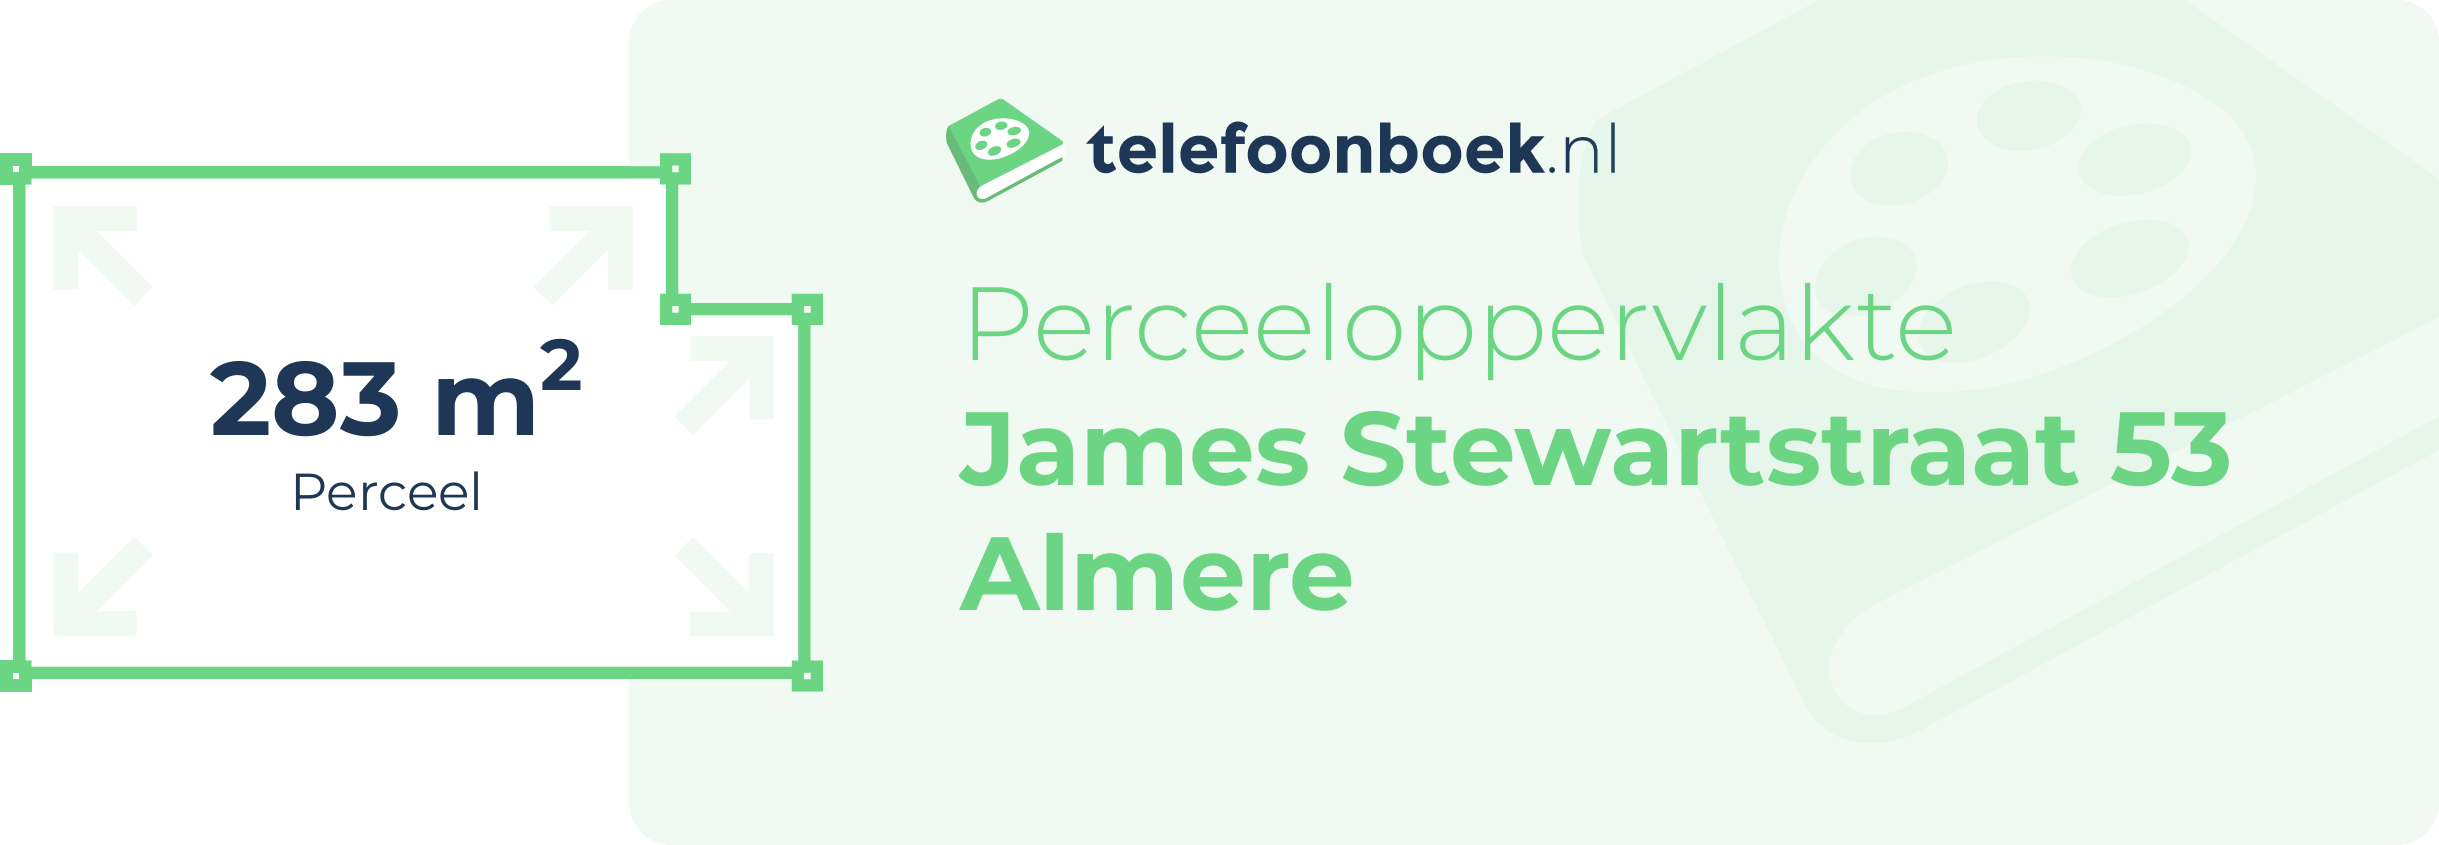 Perceeloppervlakte James Stewartstraat 53 Almere